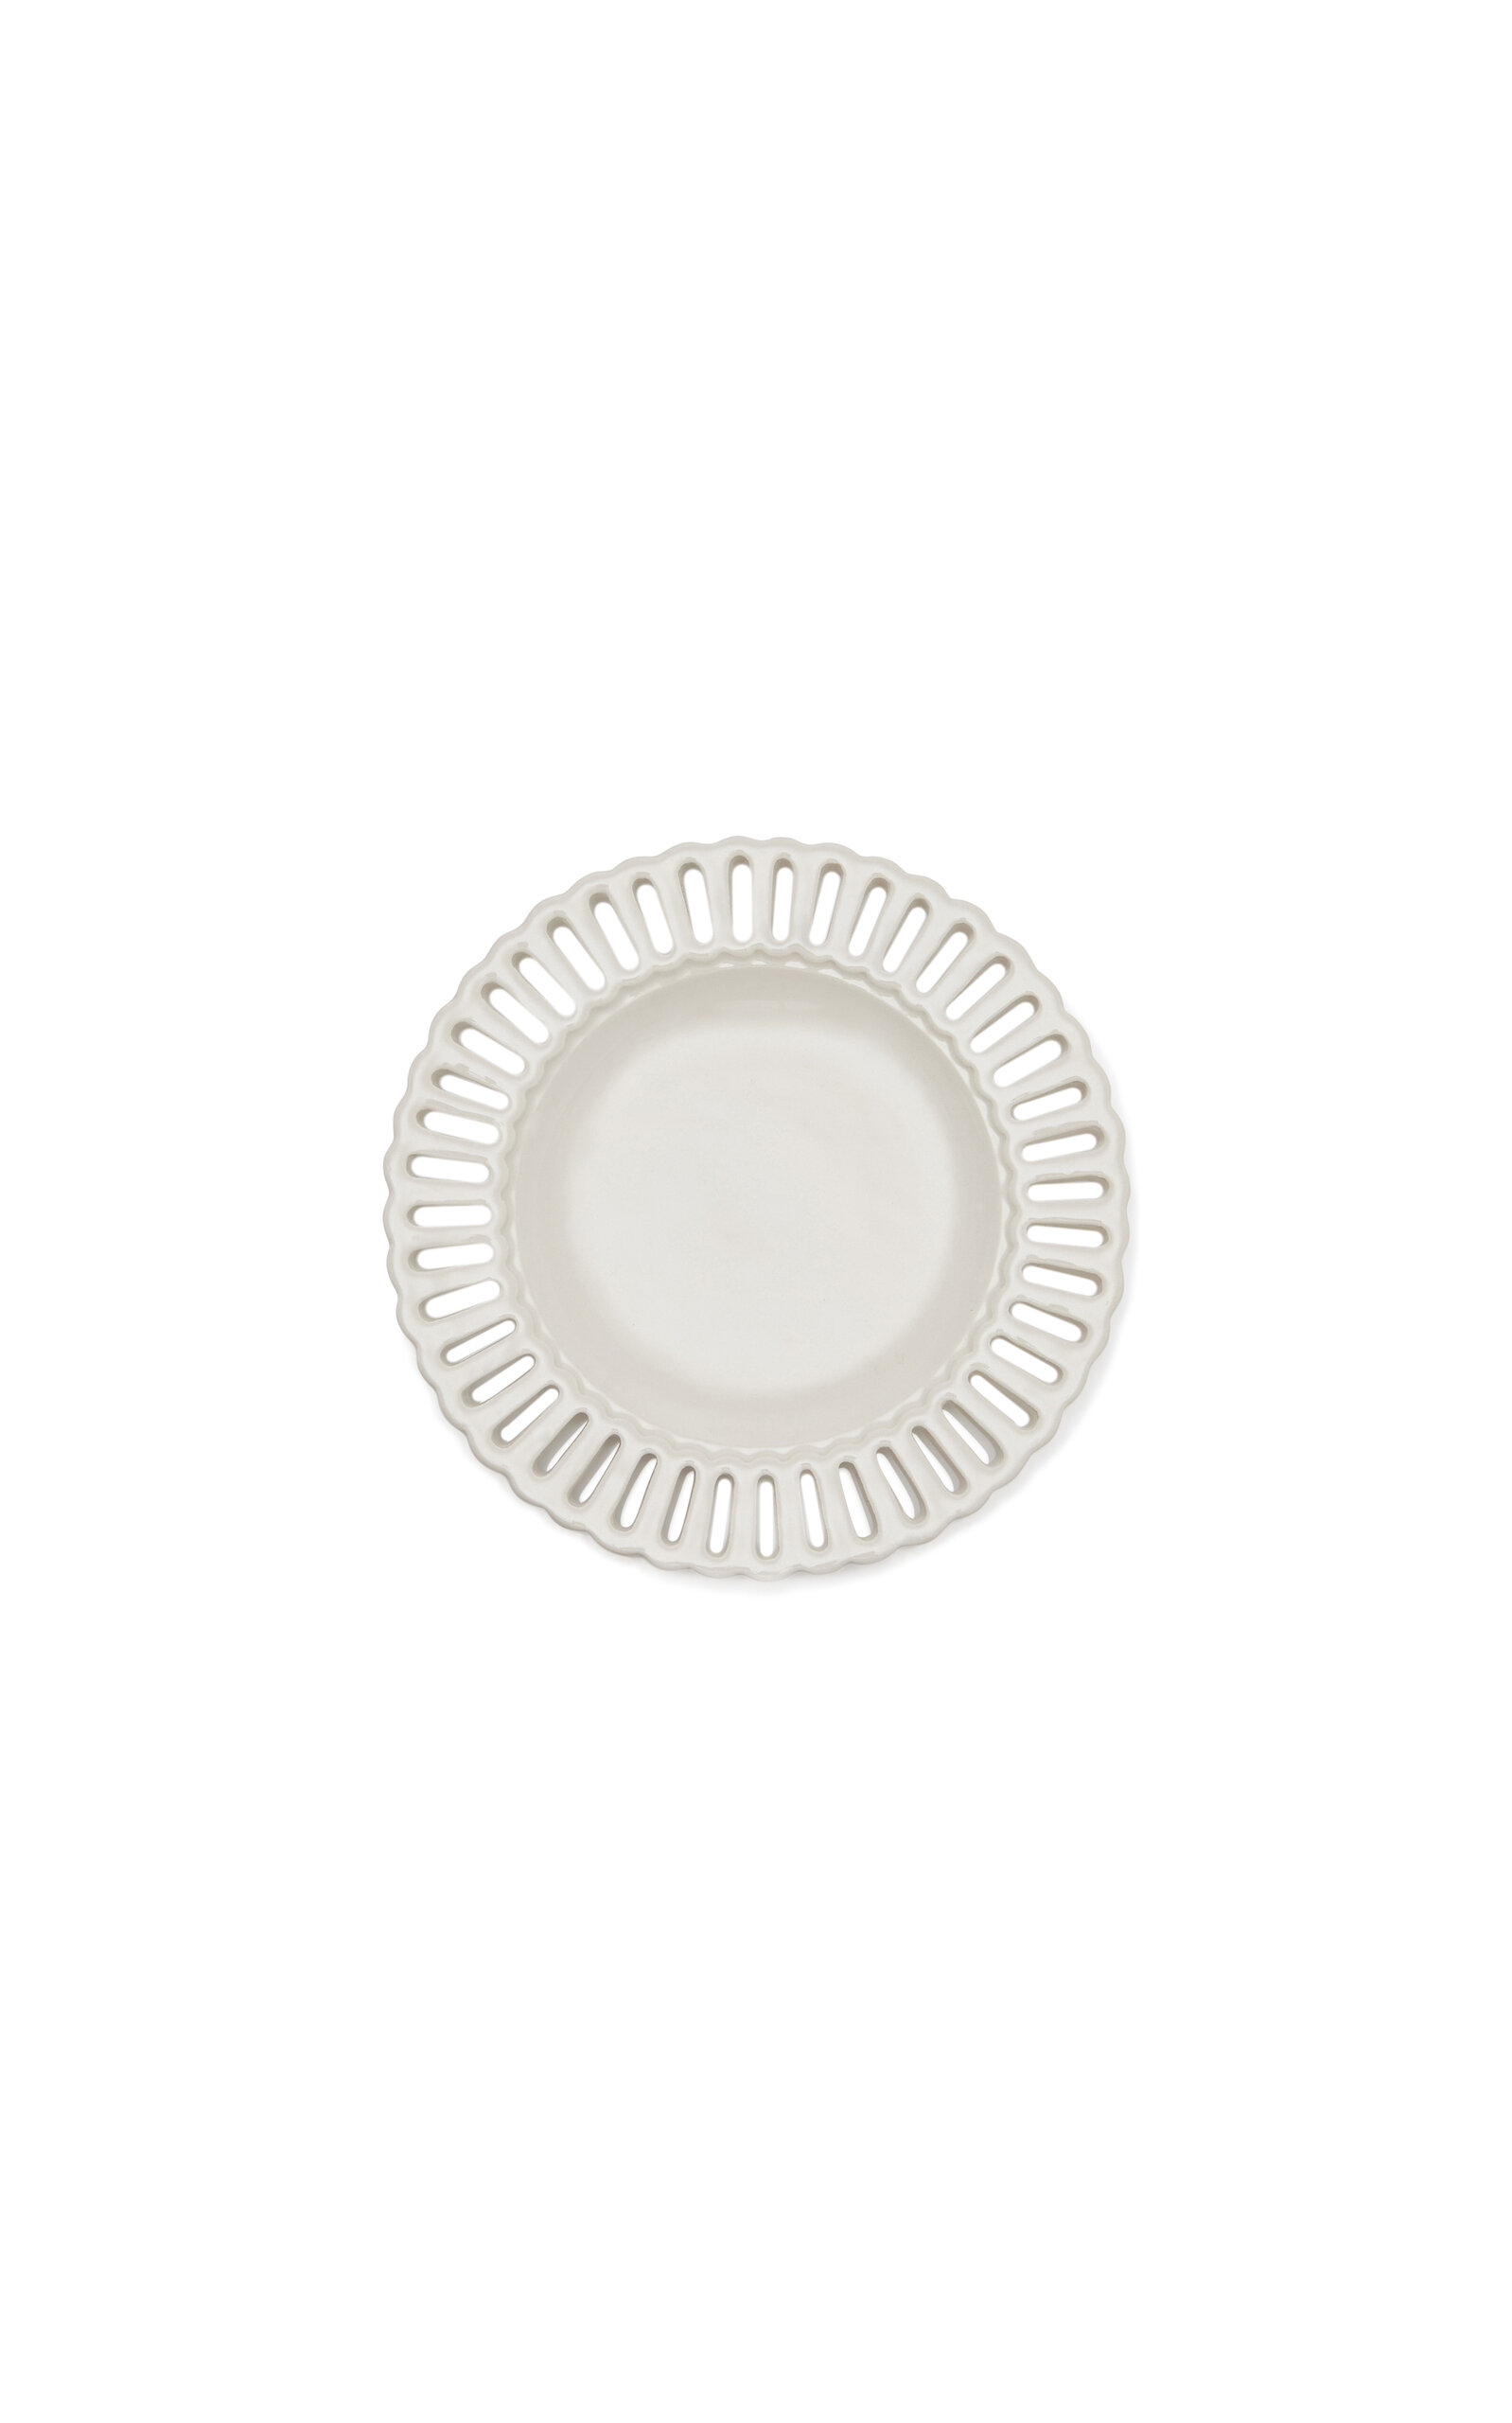 Moda Domus Balconata Creamware Dessert Plate In White